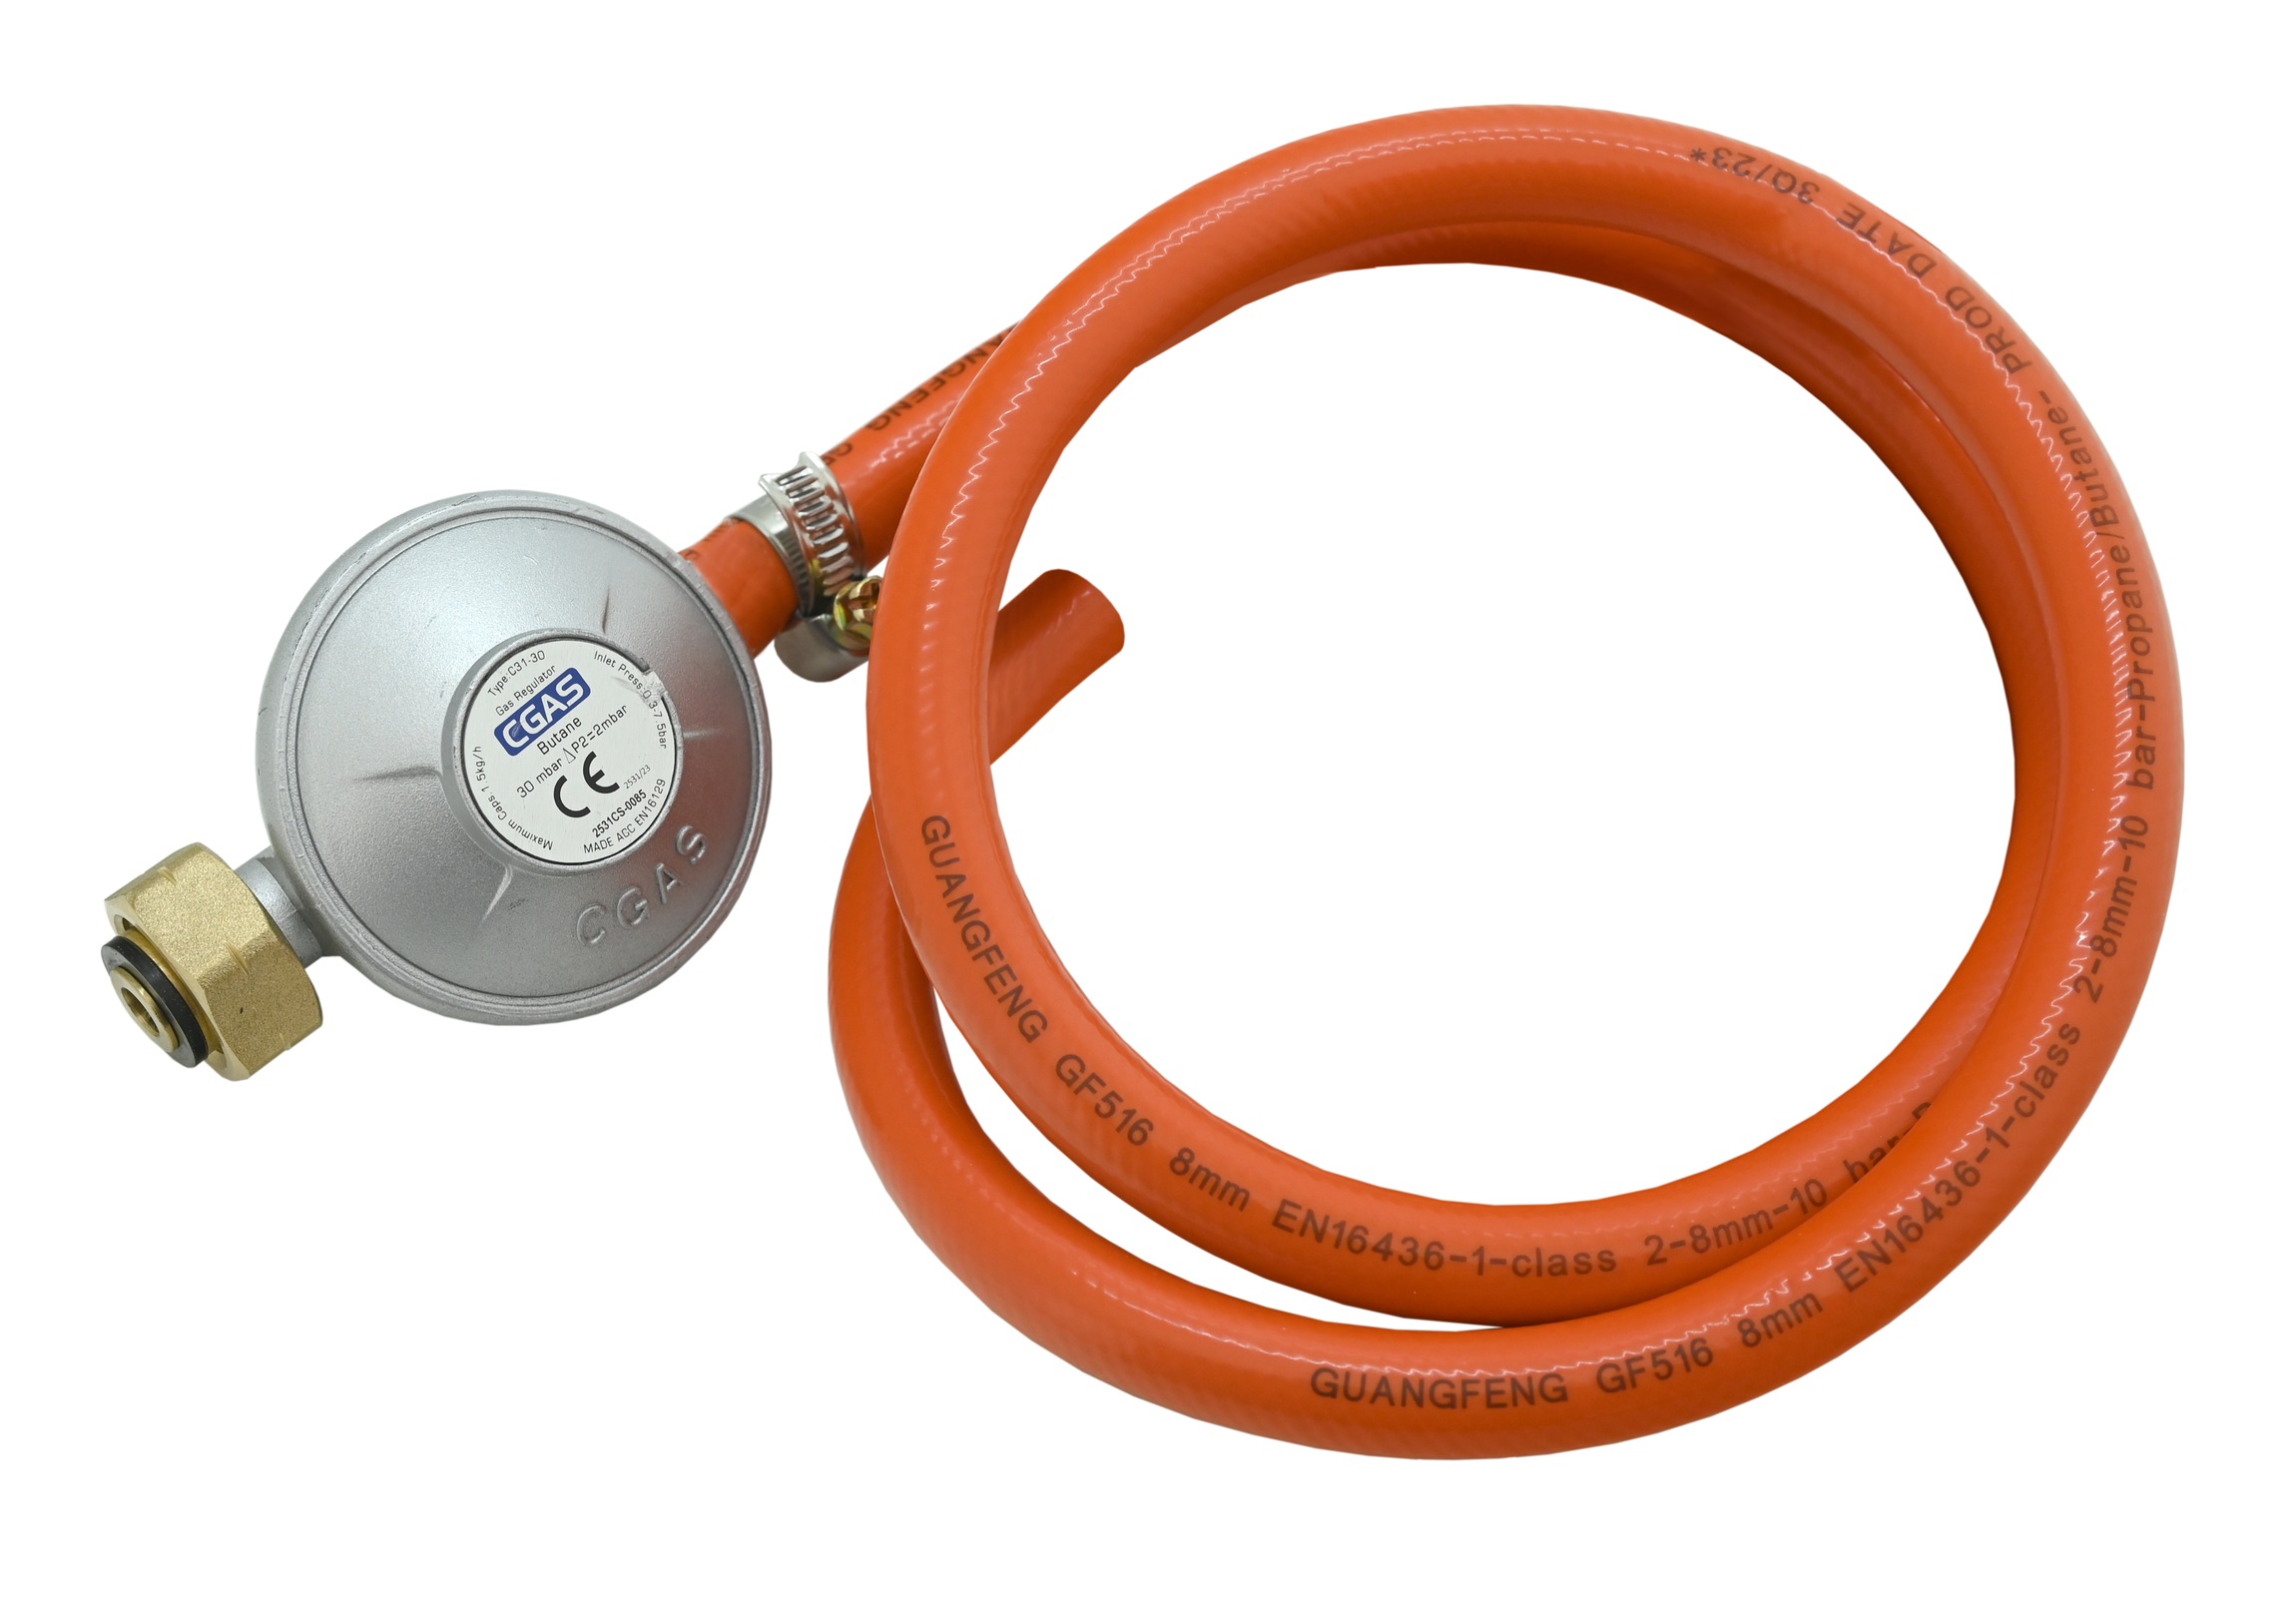 Plynový regulátor tlaku 30mbar EN16129 - sada 0,9m hadice Cattara 13606